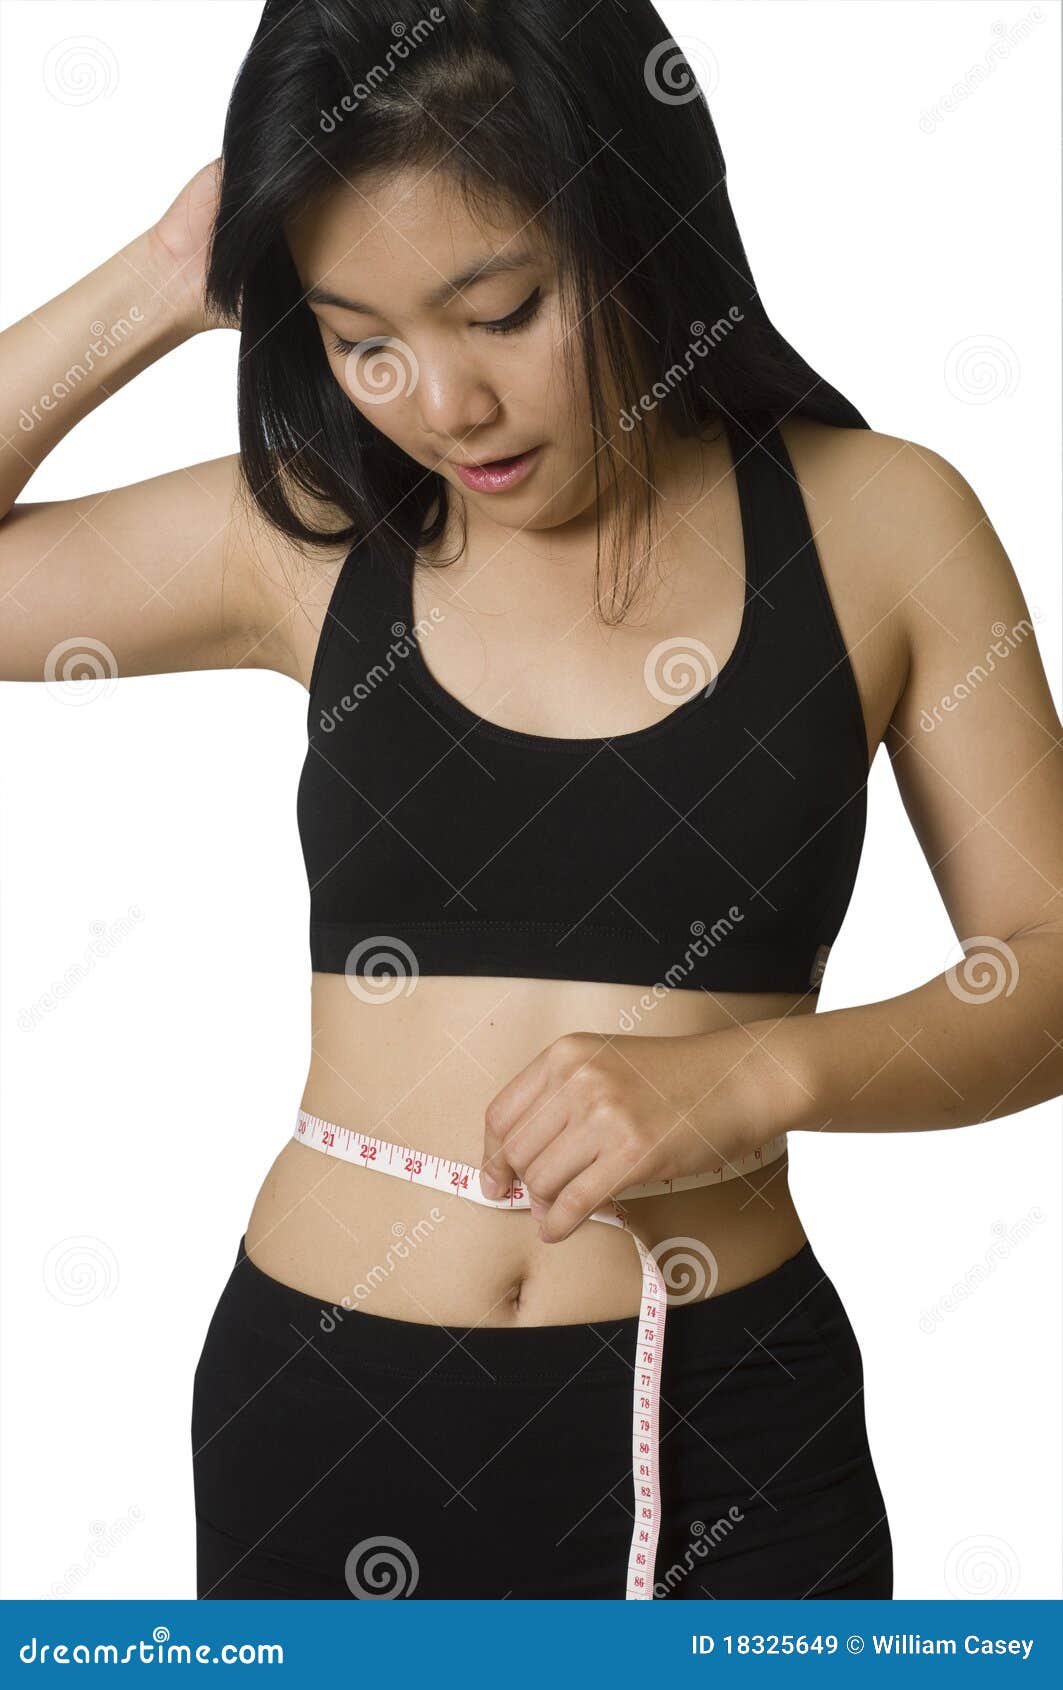 163 Woman Measuring Her Bra Size Tape Measure Stock Photos - Free